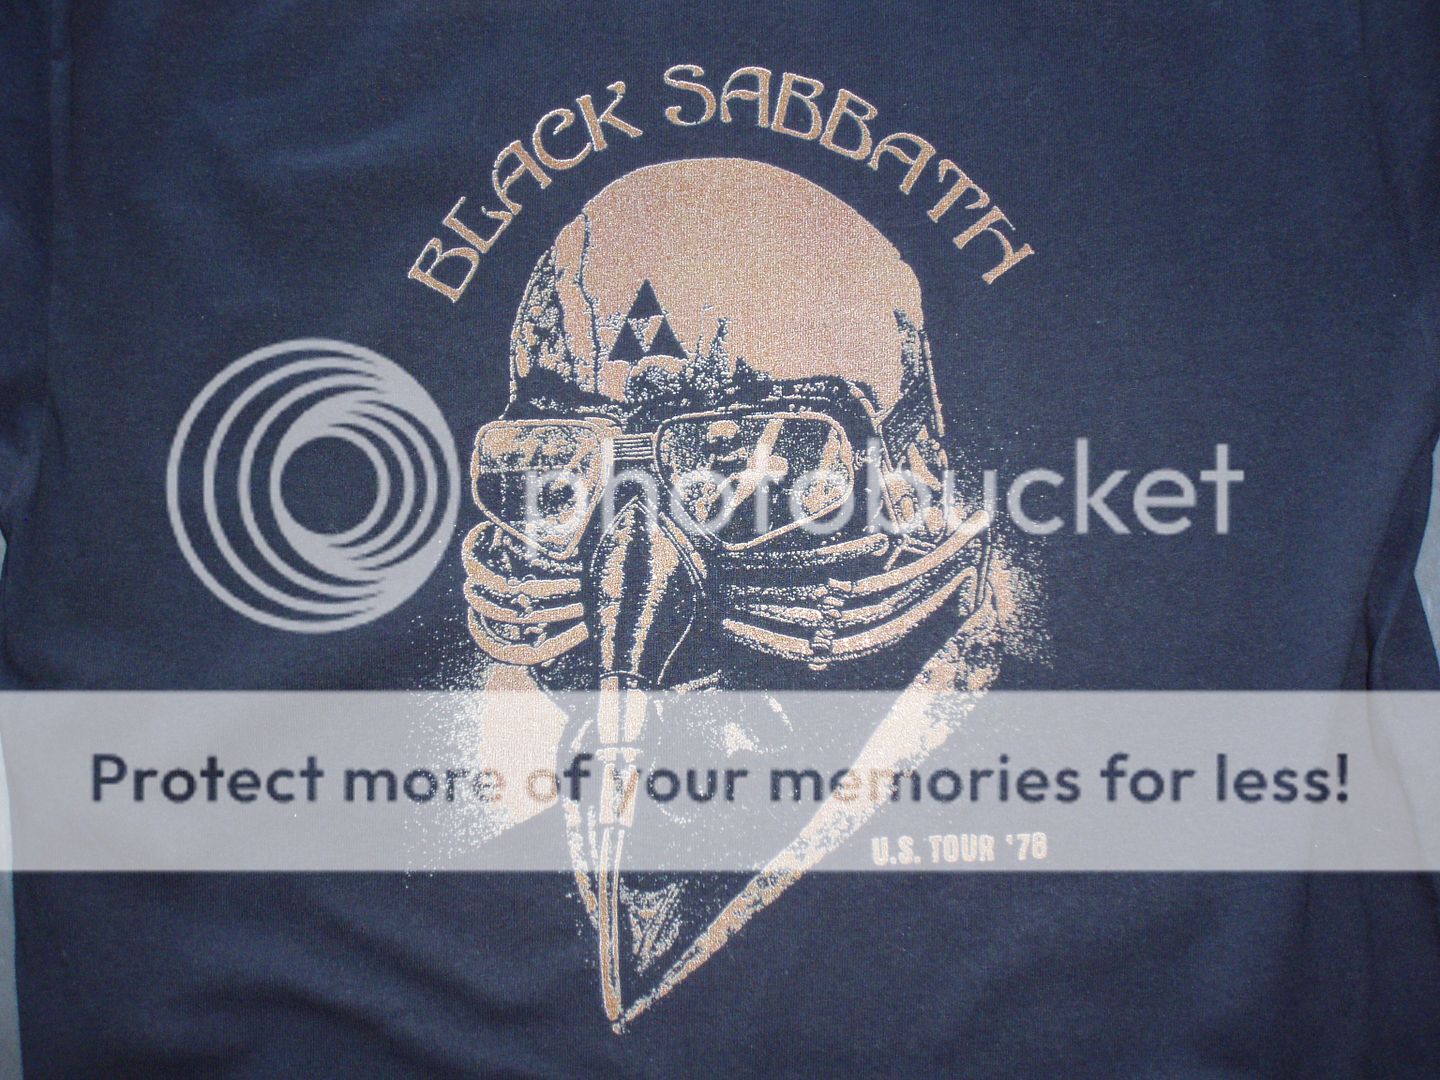 iron-man-black-sabbath-shirt-03.jpg